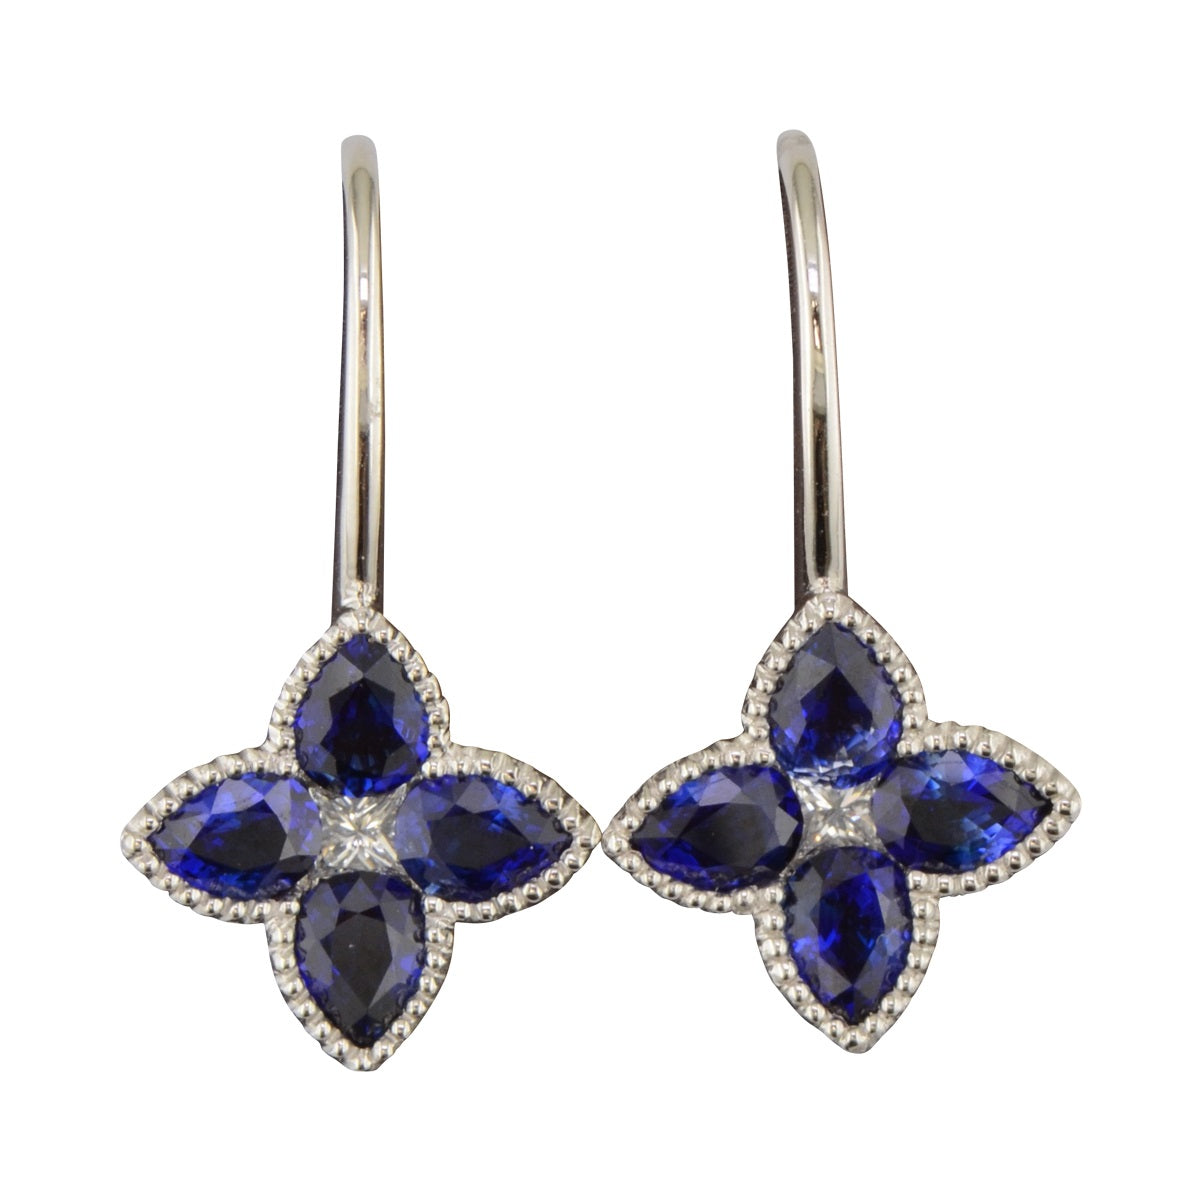 Sapphire quatrafoil earrings "Starry Night" in 18k white gold